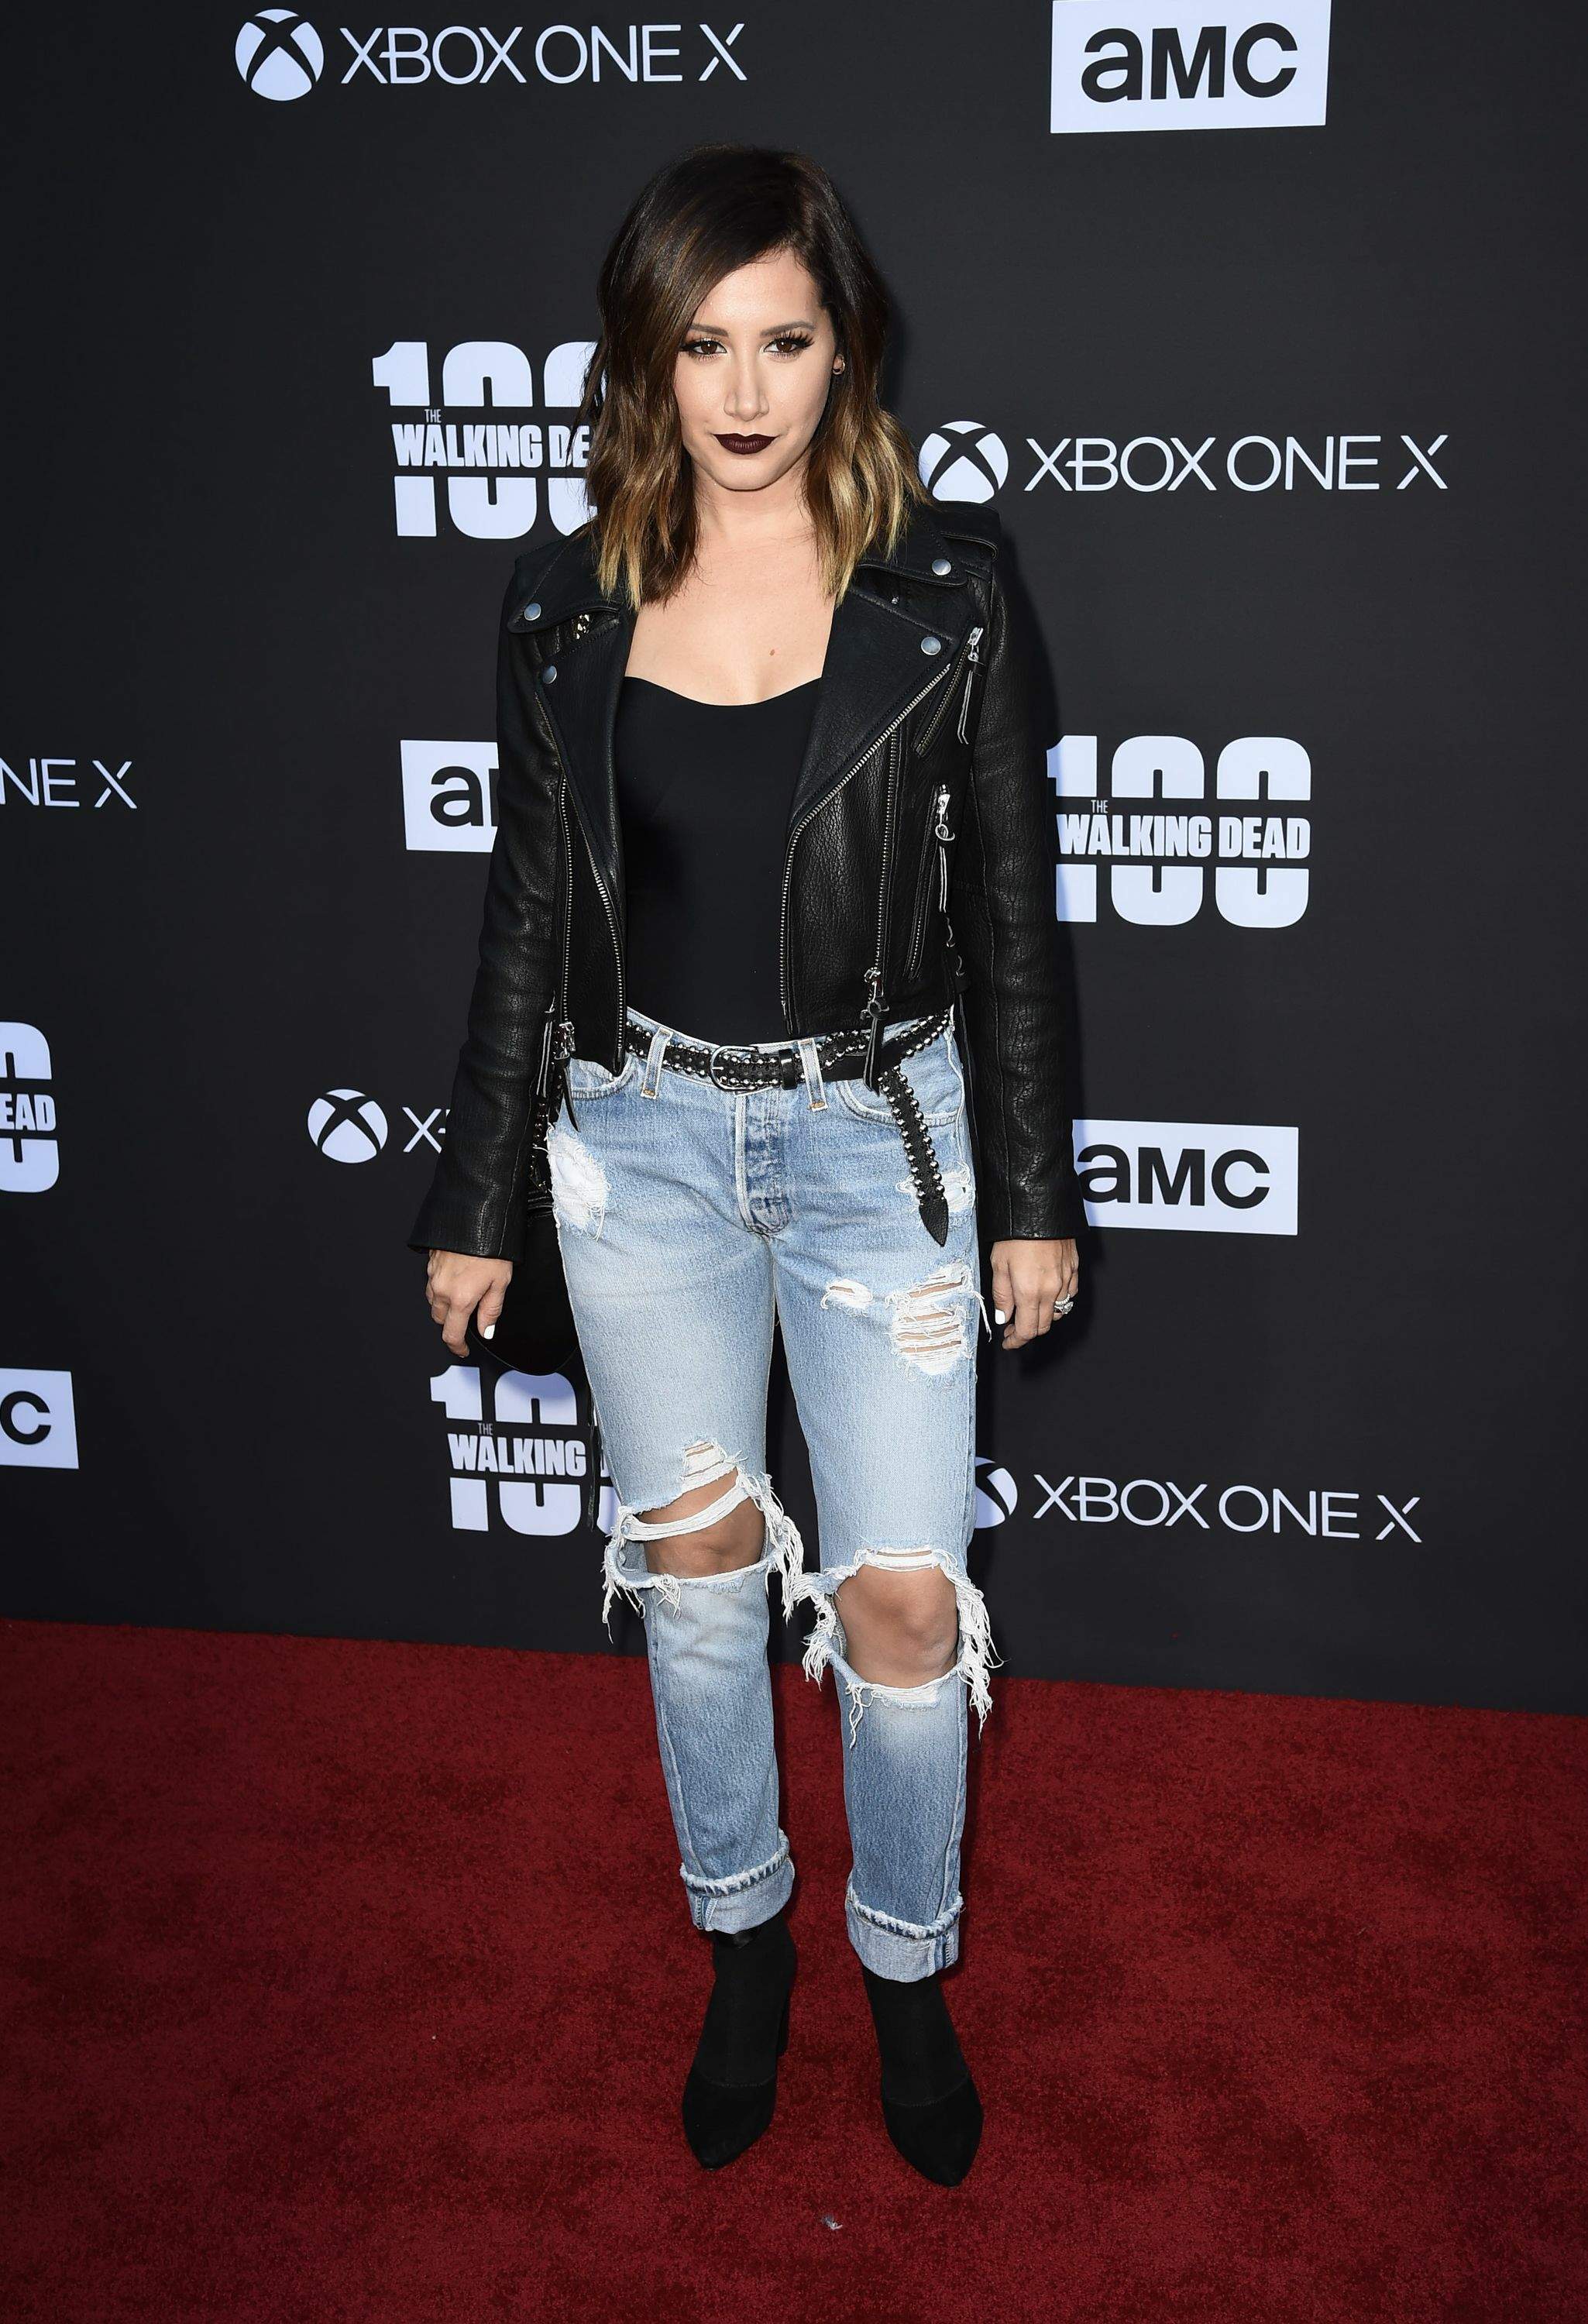 Ashley Tisdale attends The Walking Dead Season Premiere Event